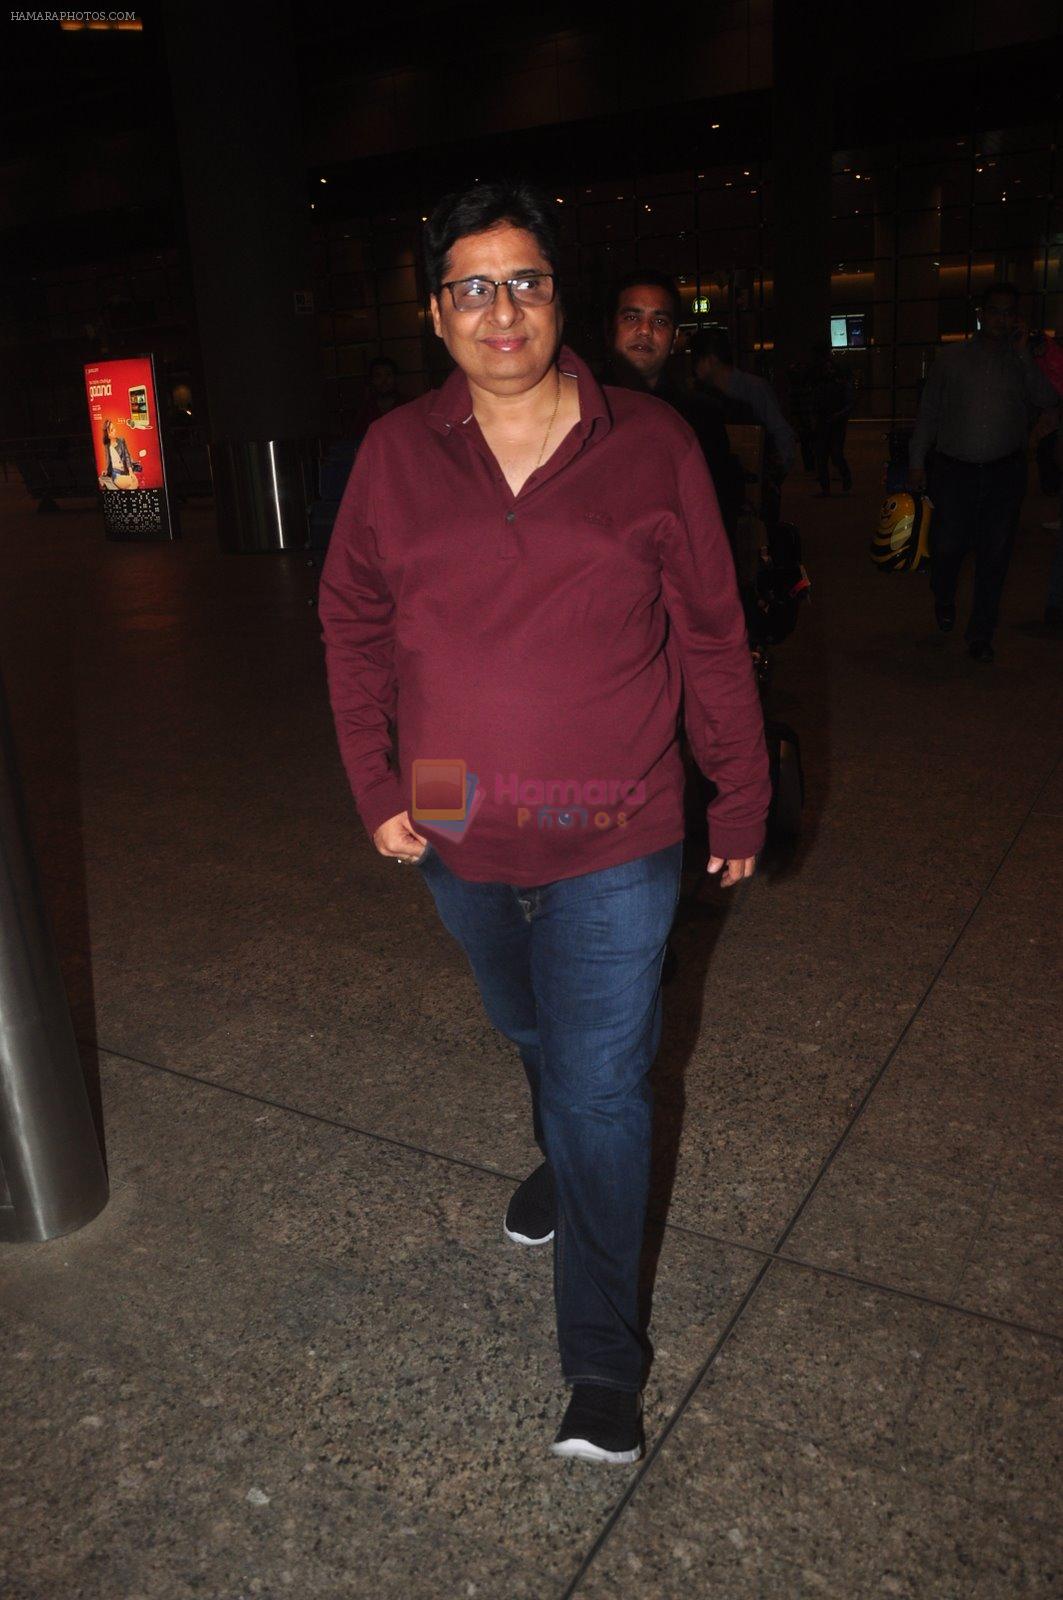 Vashu Bhagnani snapped at airport in Mumbai on 4th Jan 2014